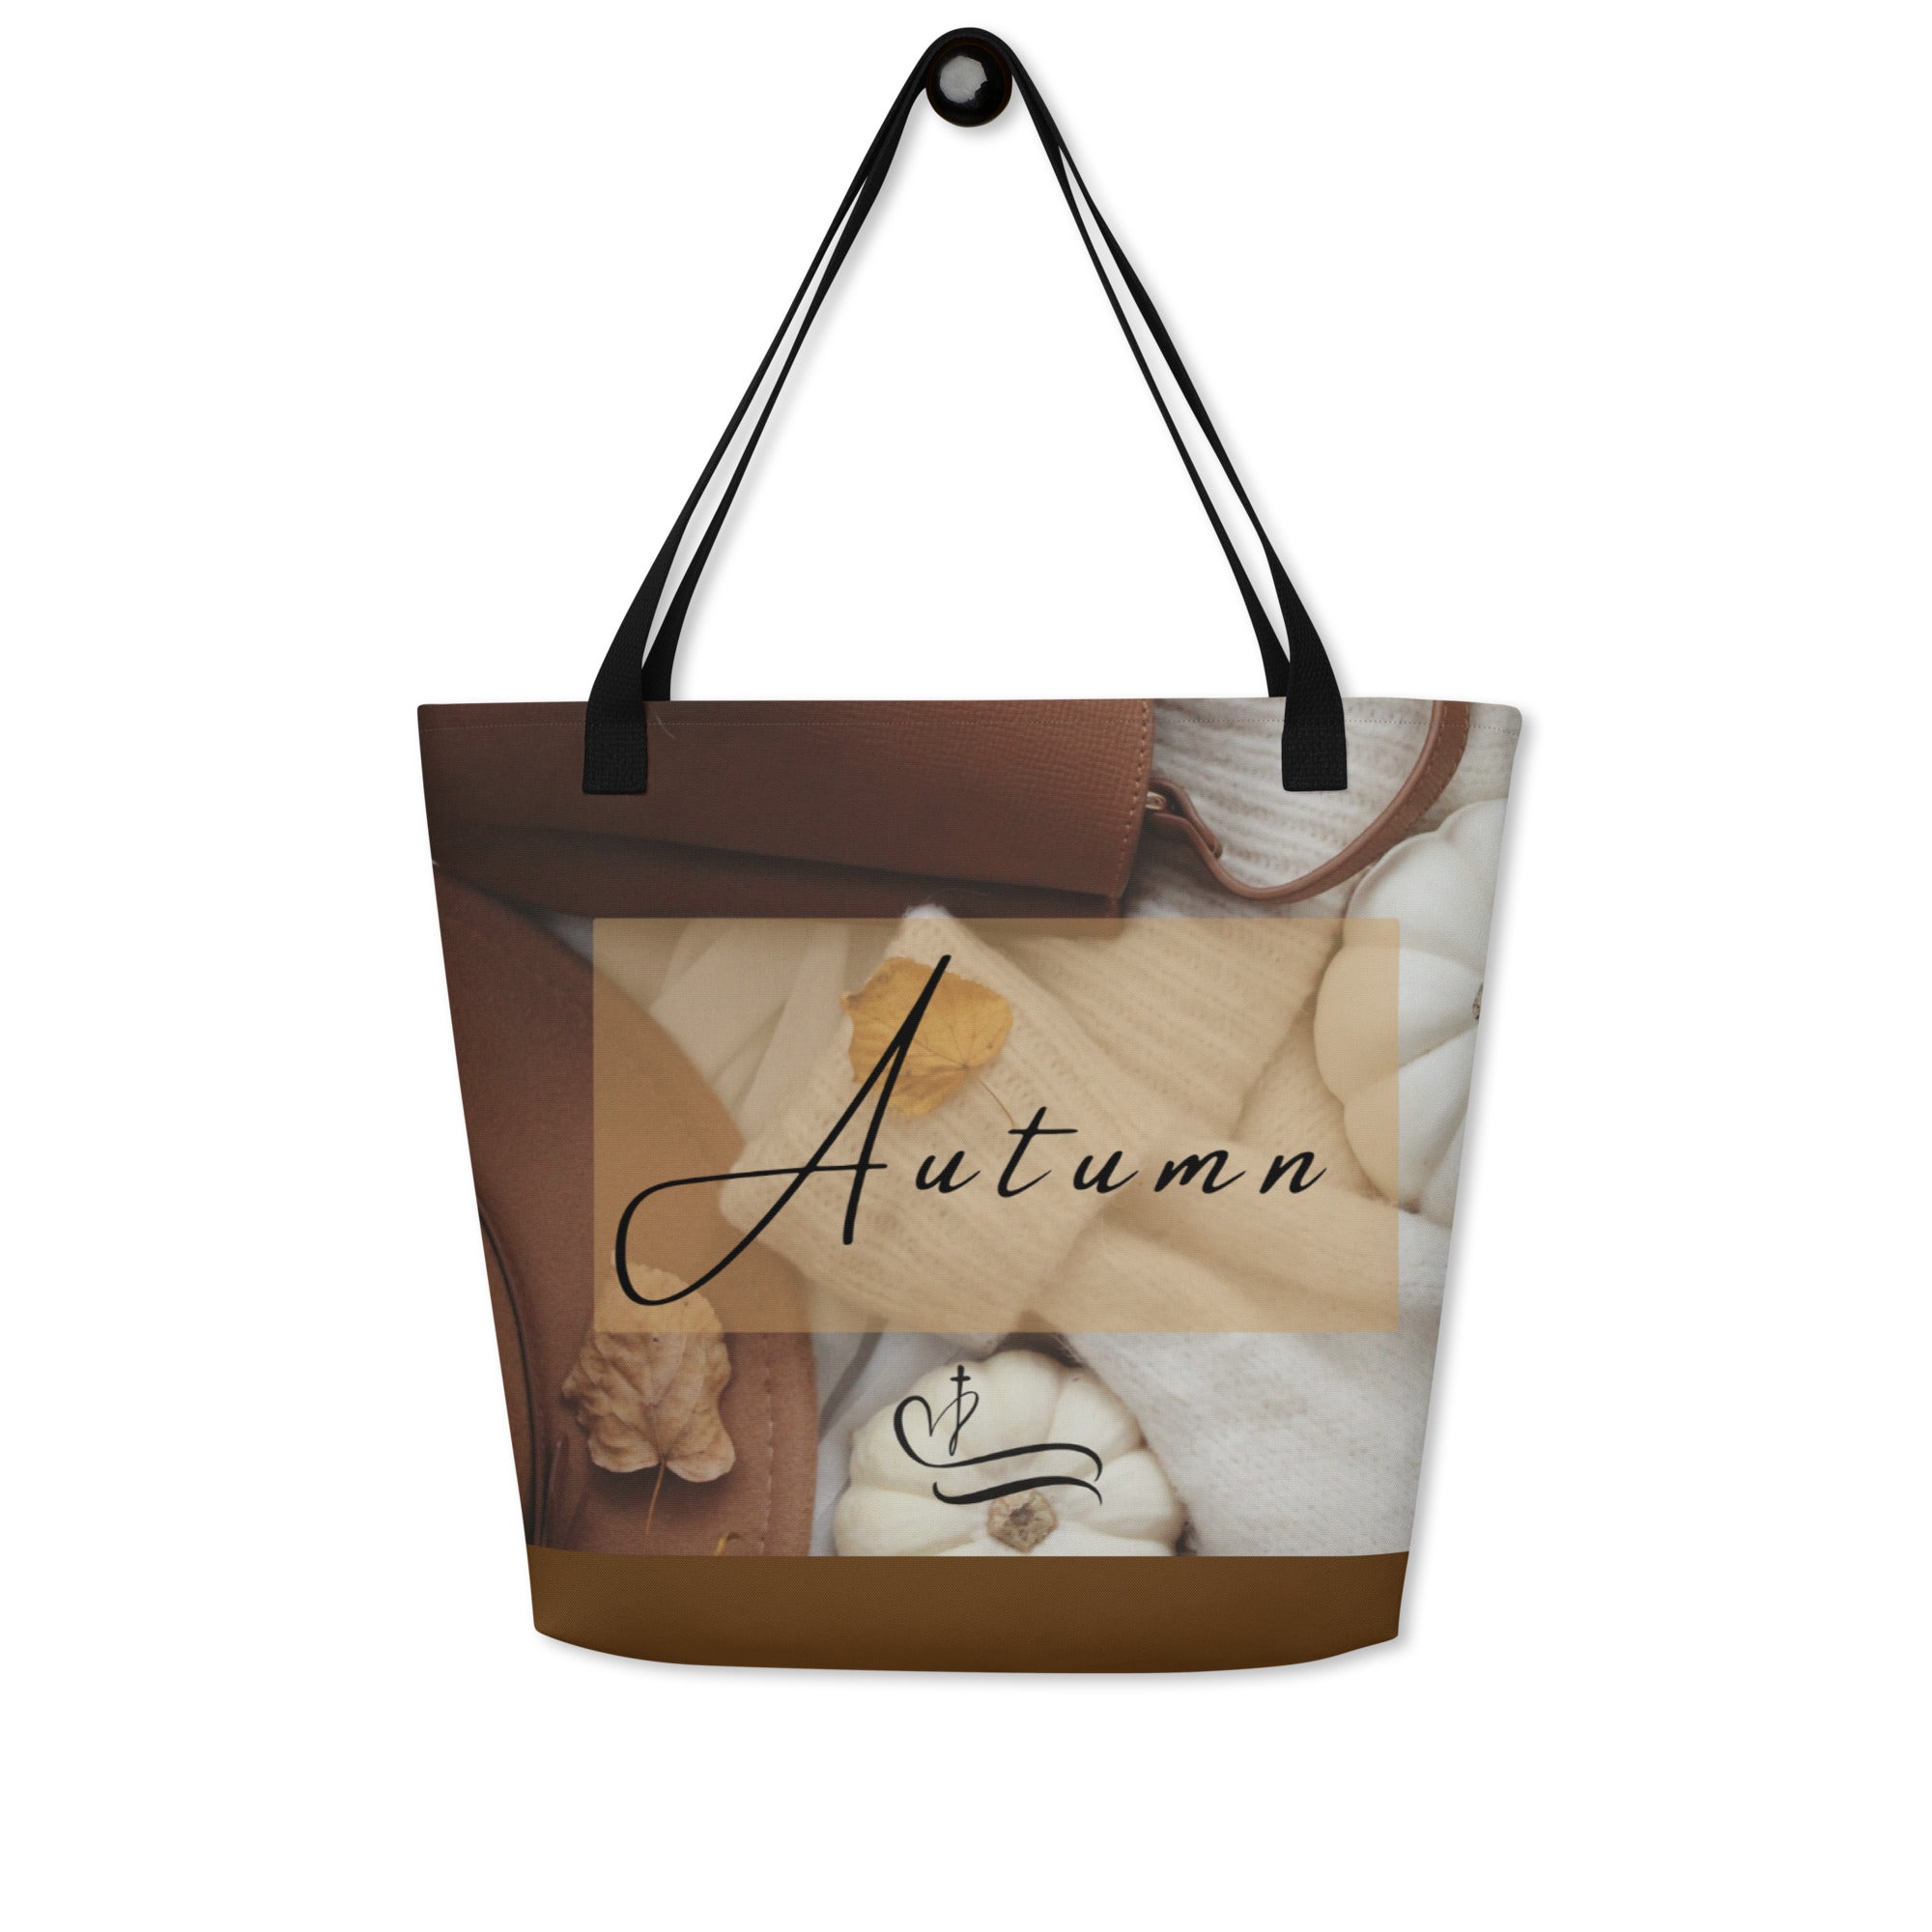 Autumn Large Tote Bag